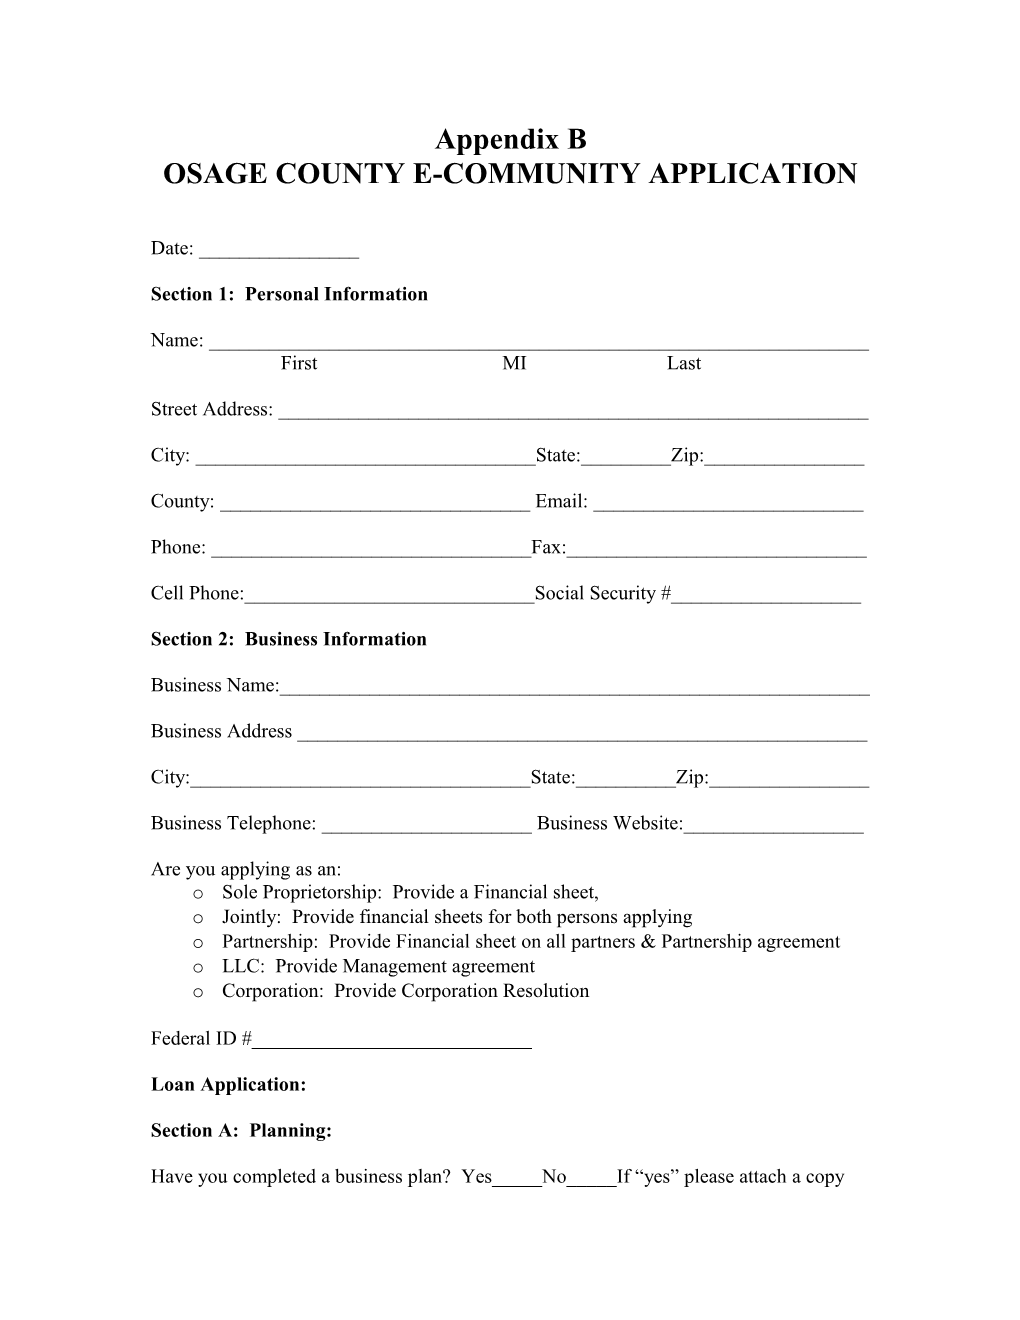 Osage County Economic Development Corporation